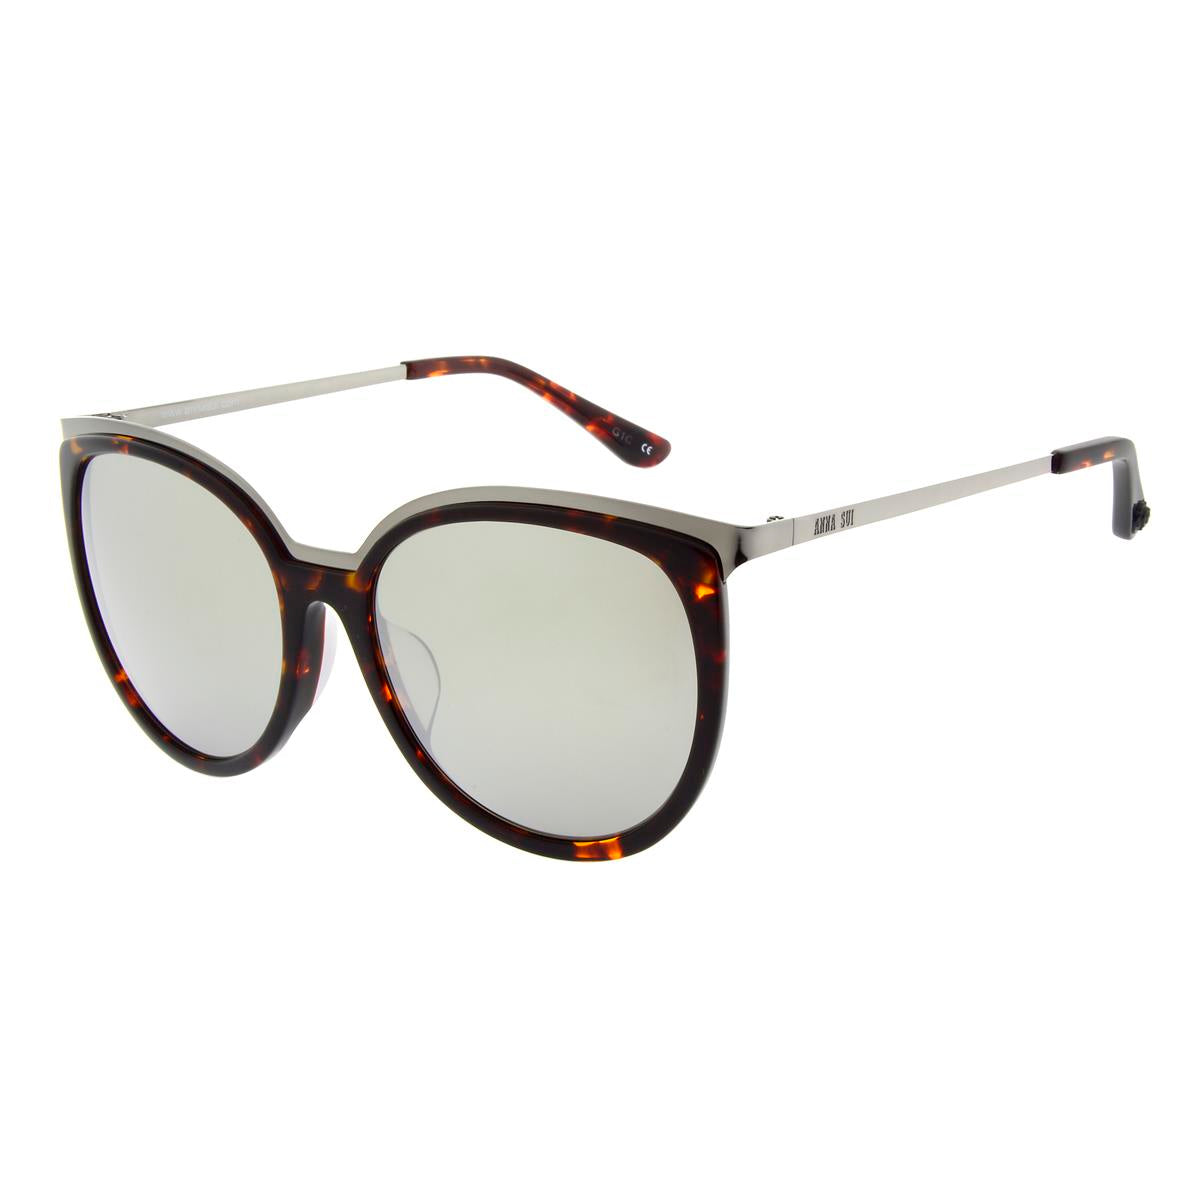 Anna Sui AS1089-1C 901 Sunglasses